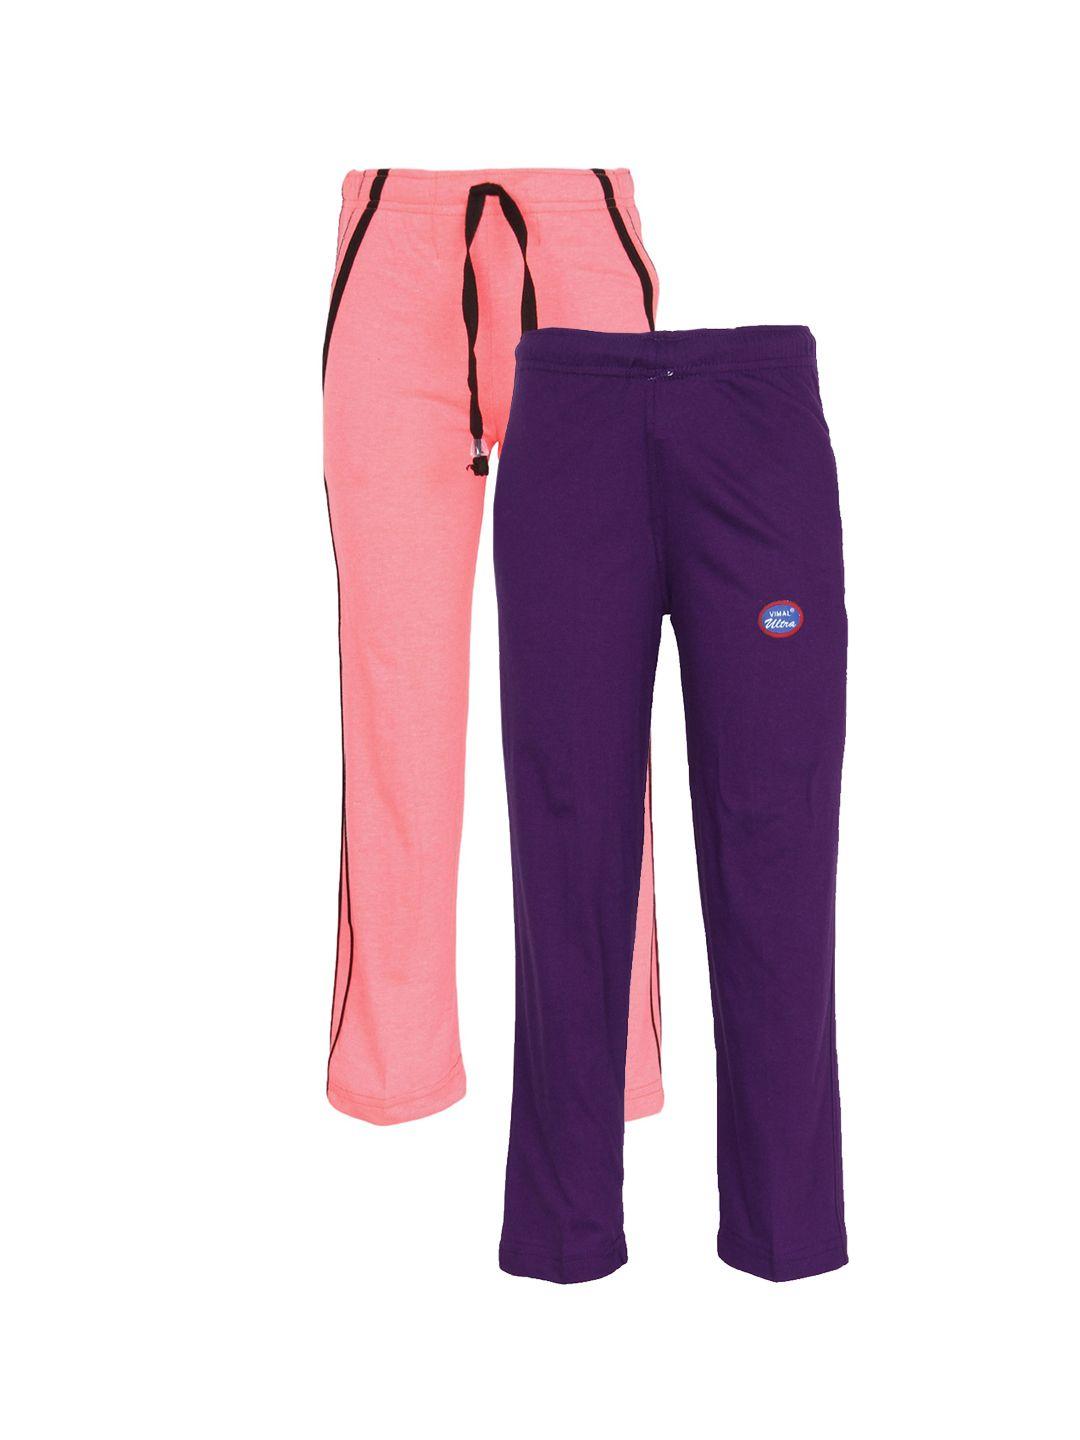 vimal jonney pack of 2 peach & purple track pants